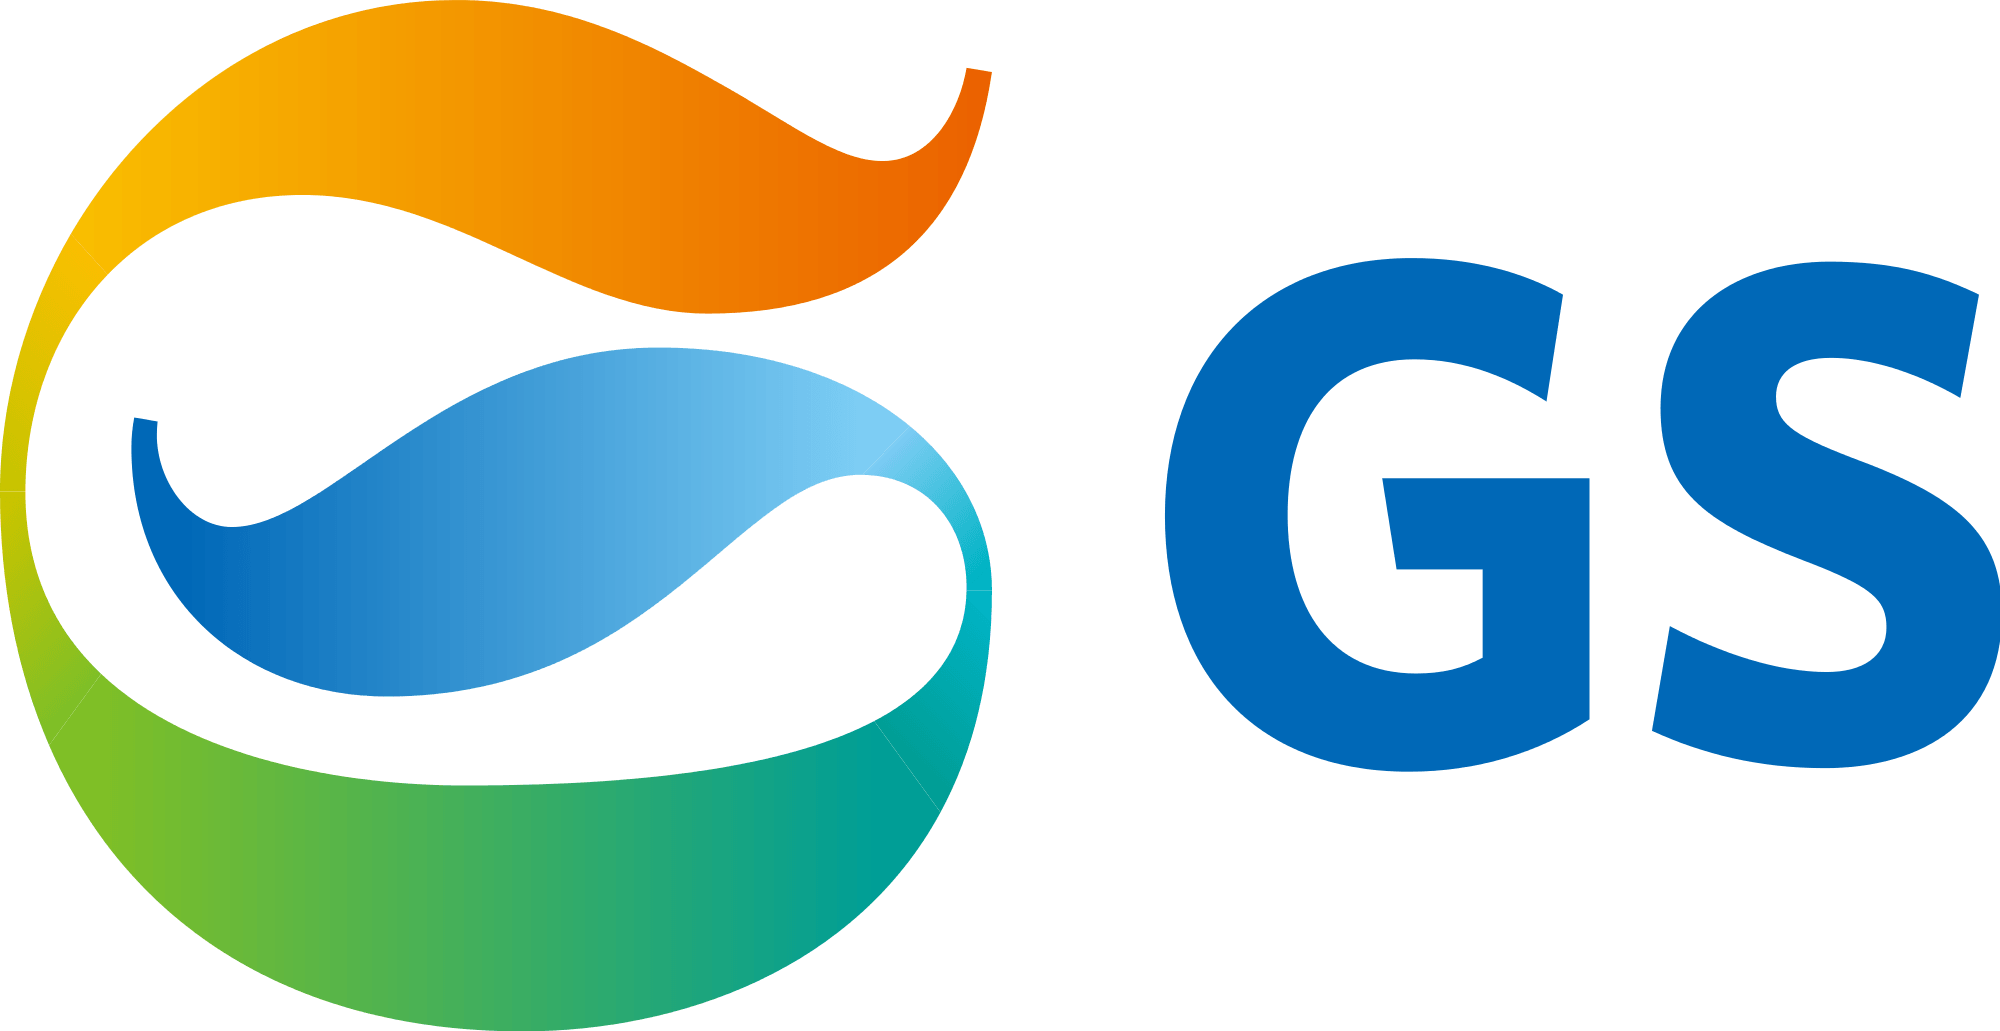 GS Logo - File:GS logo (South Korean company).svg - Wikimedia Commons